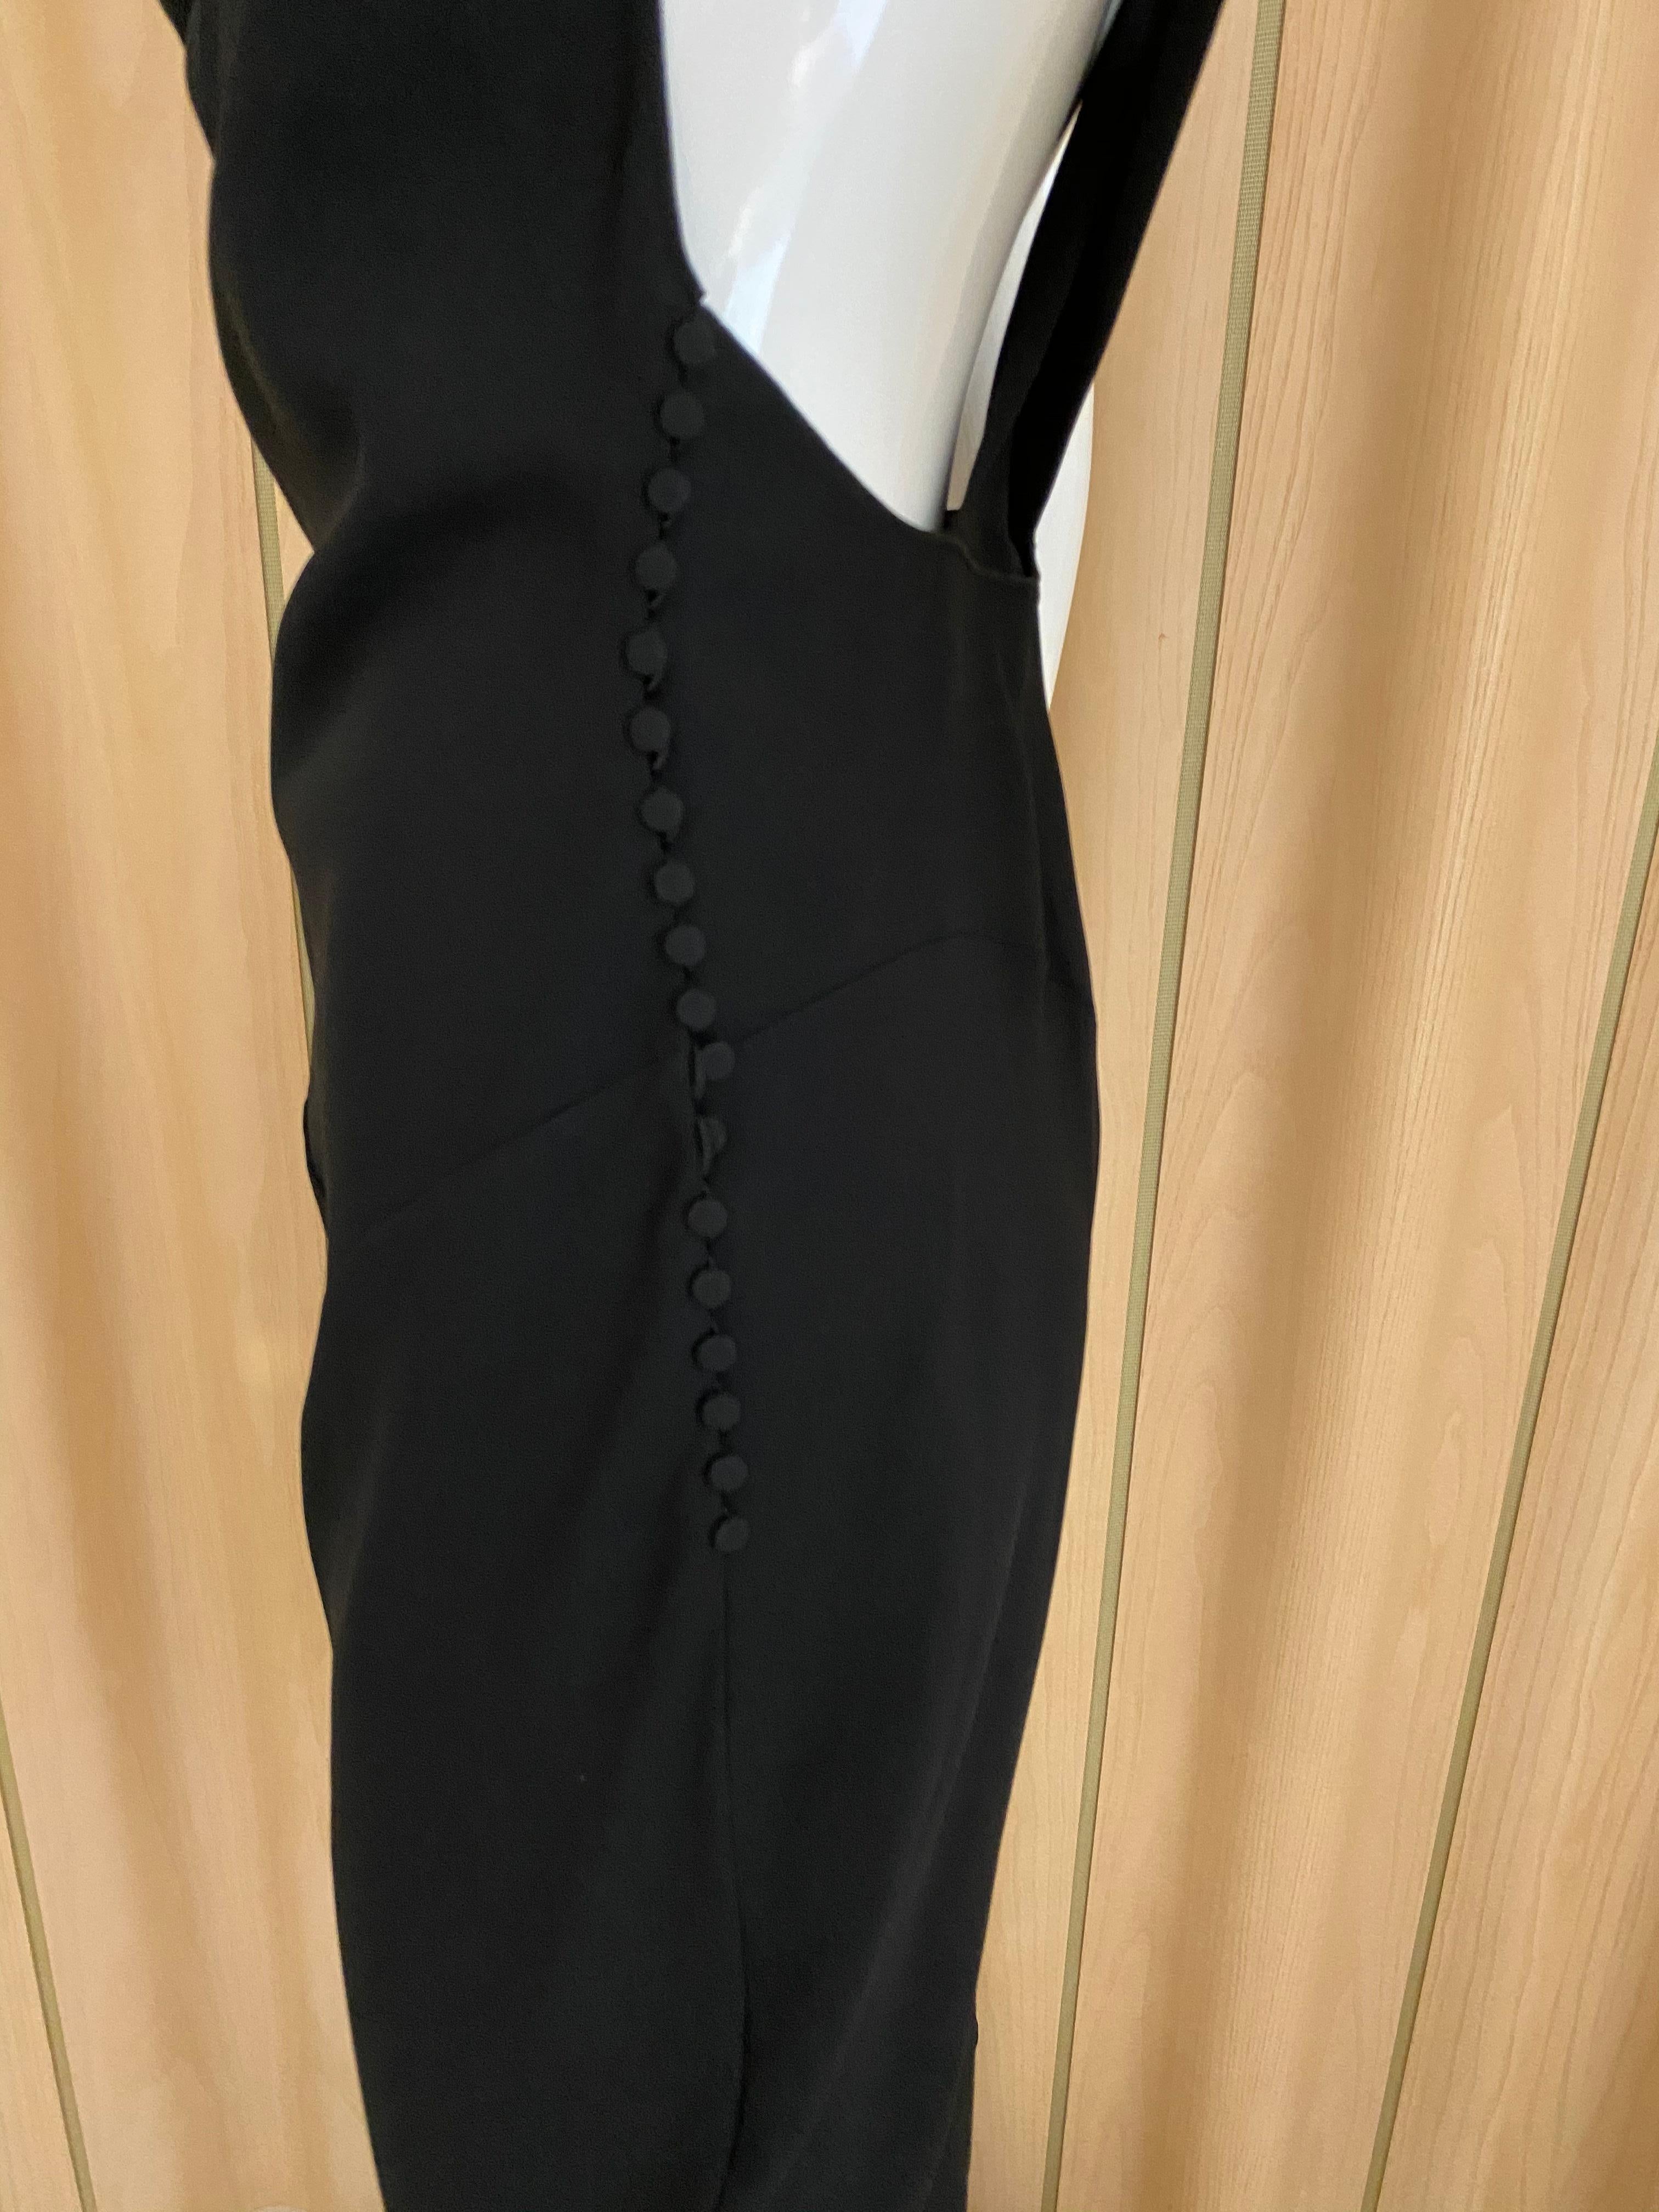 Women's John Galliano Black Silk Crepe Criss Cross Back Cocktail Dress